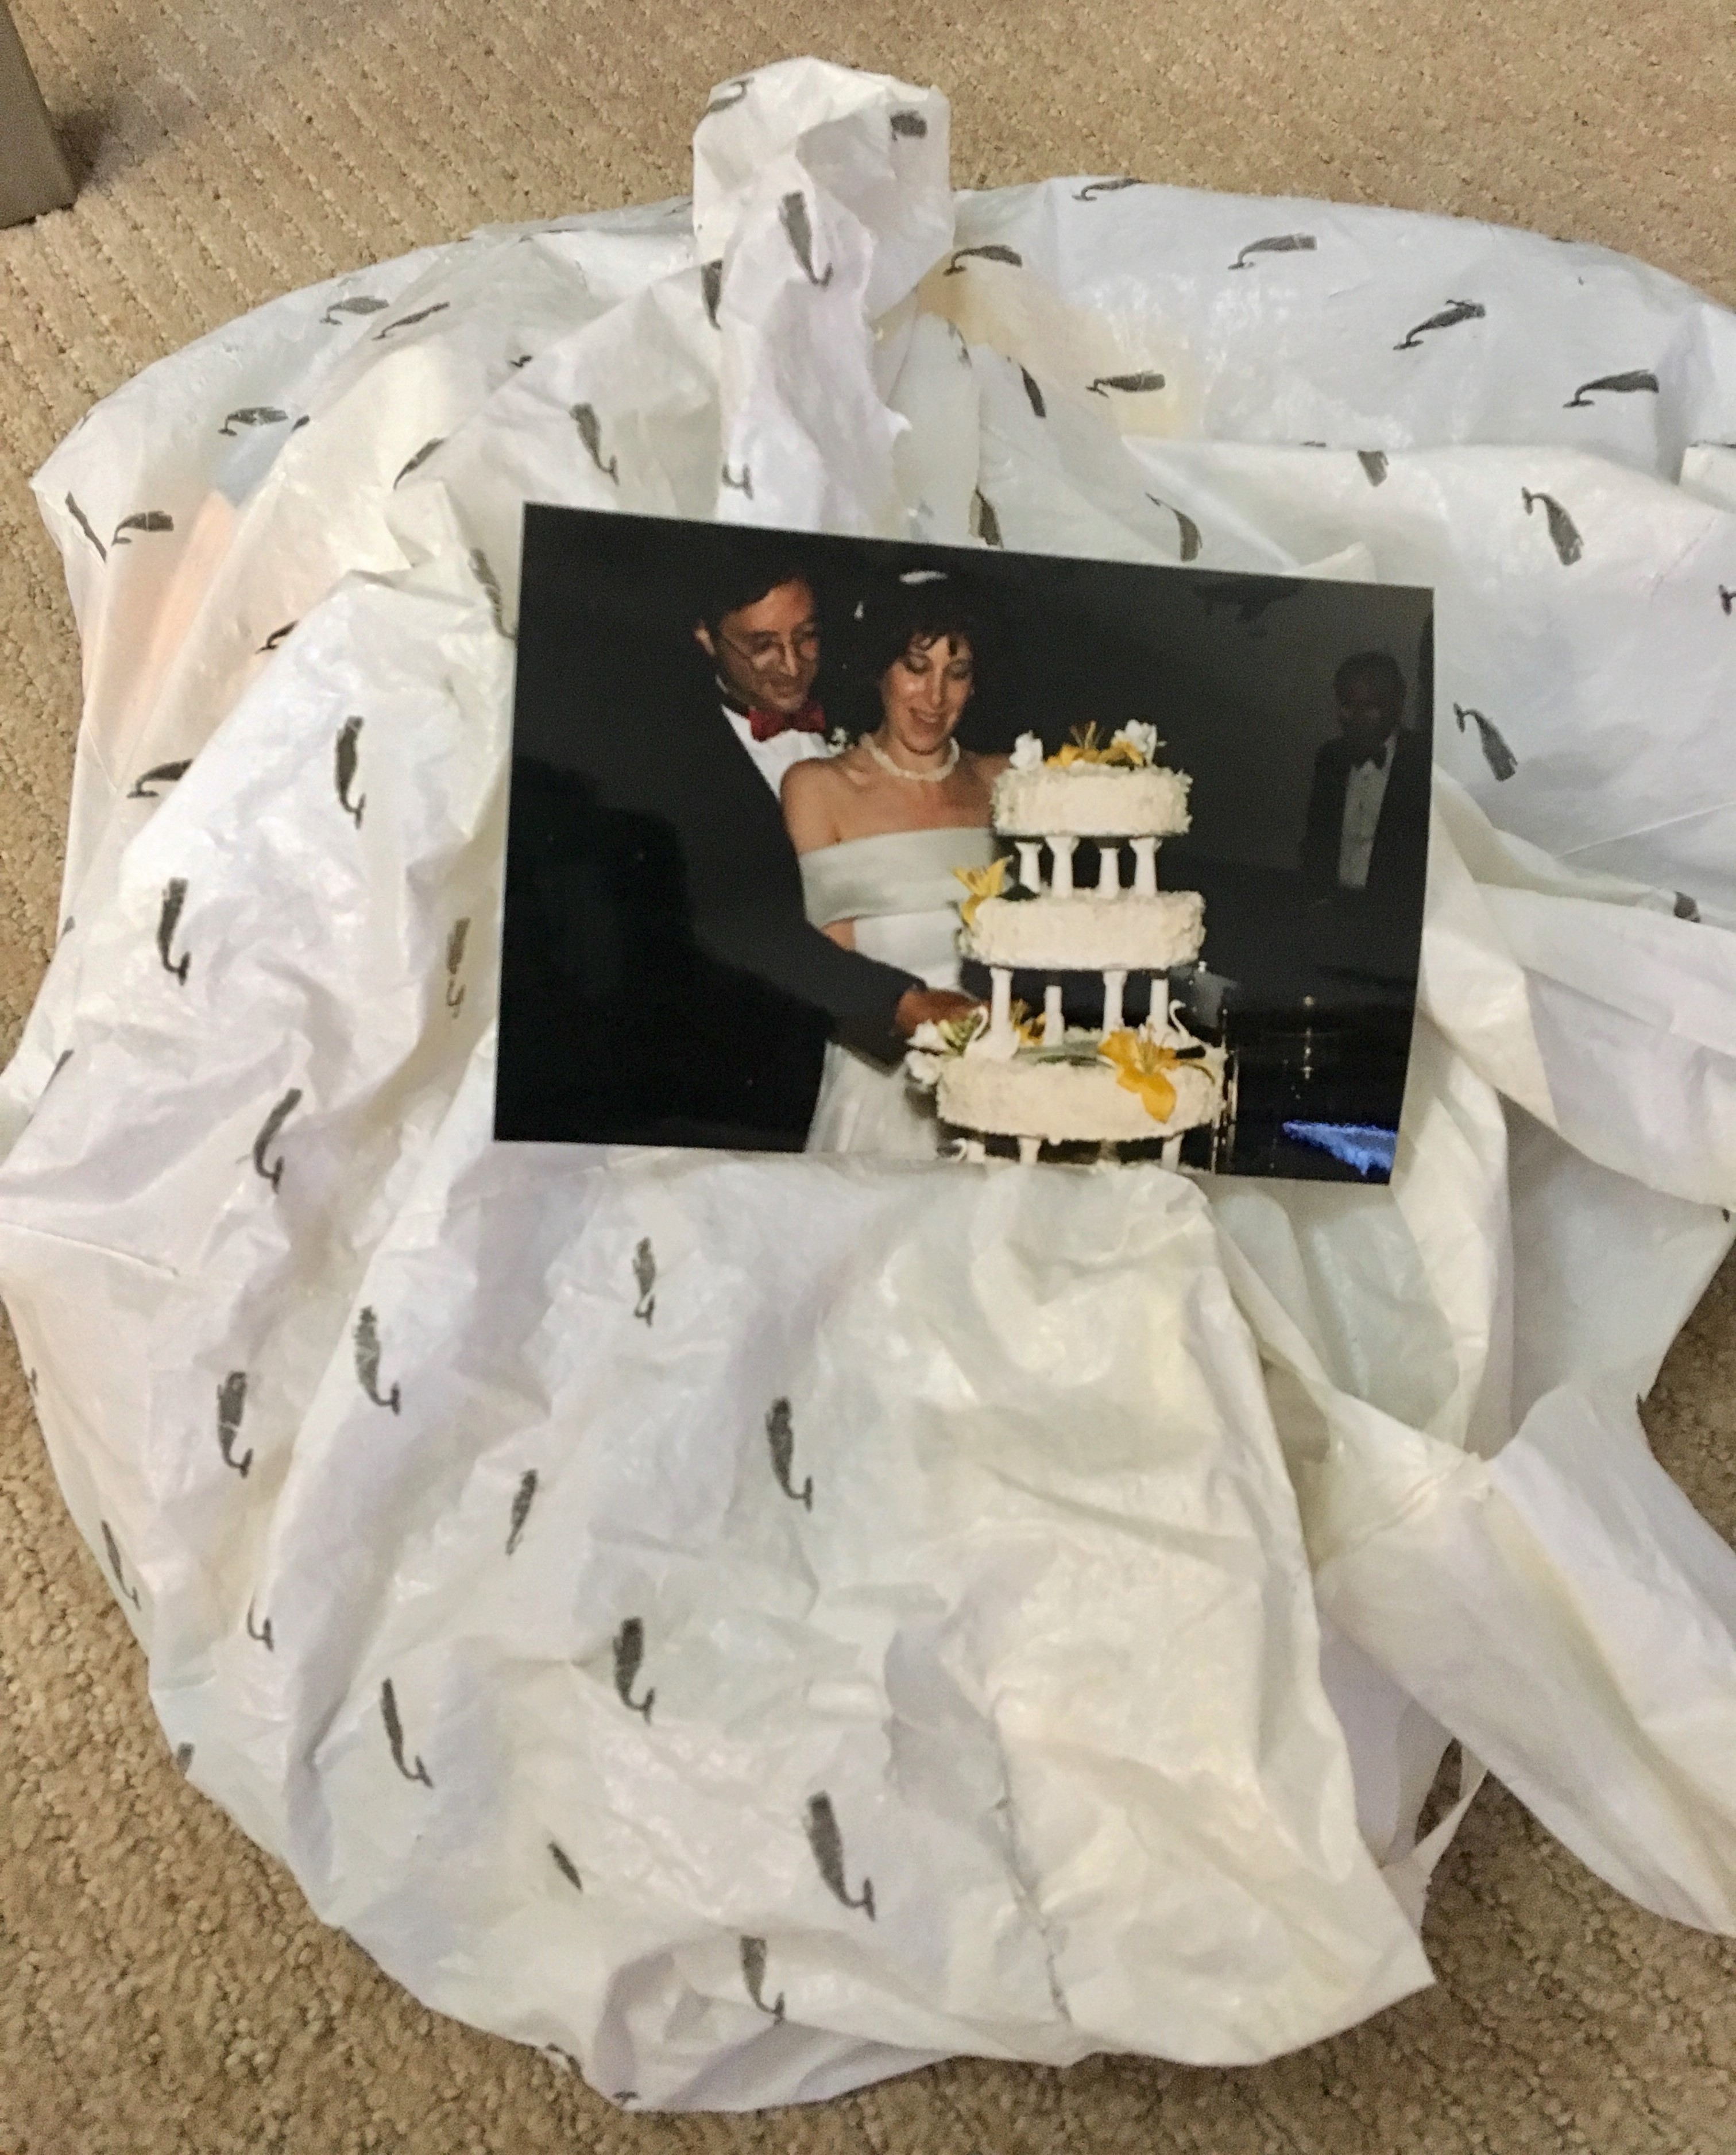 My wedding photos are still in a bag.jpg